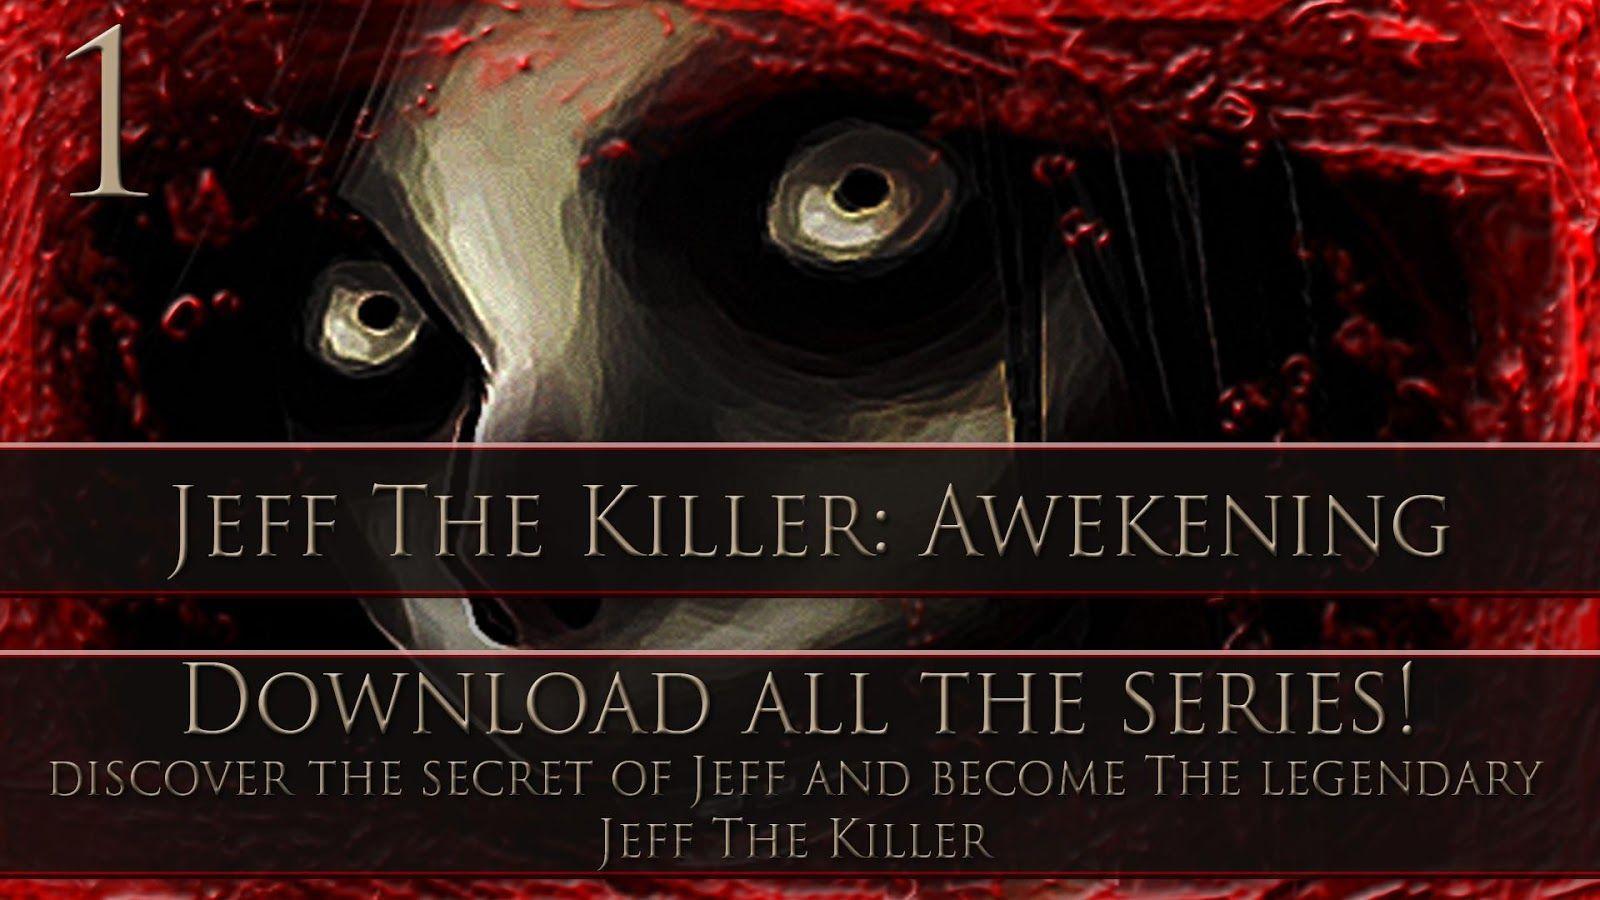 Jeff The Killer: Awakening Apps on Google Play